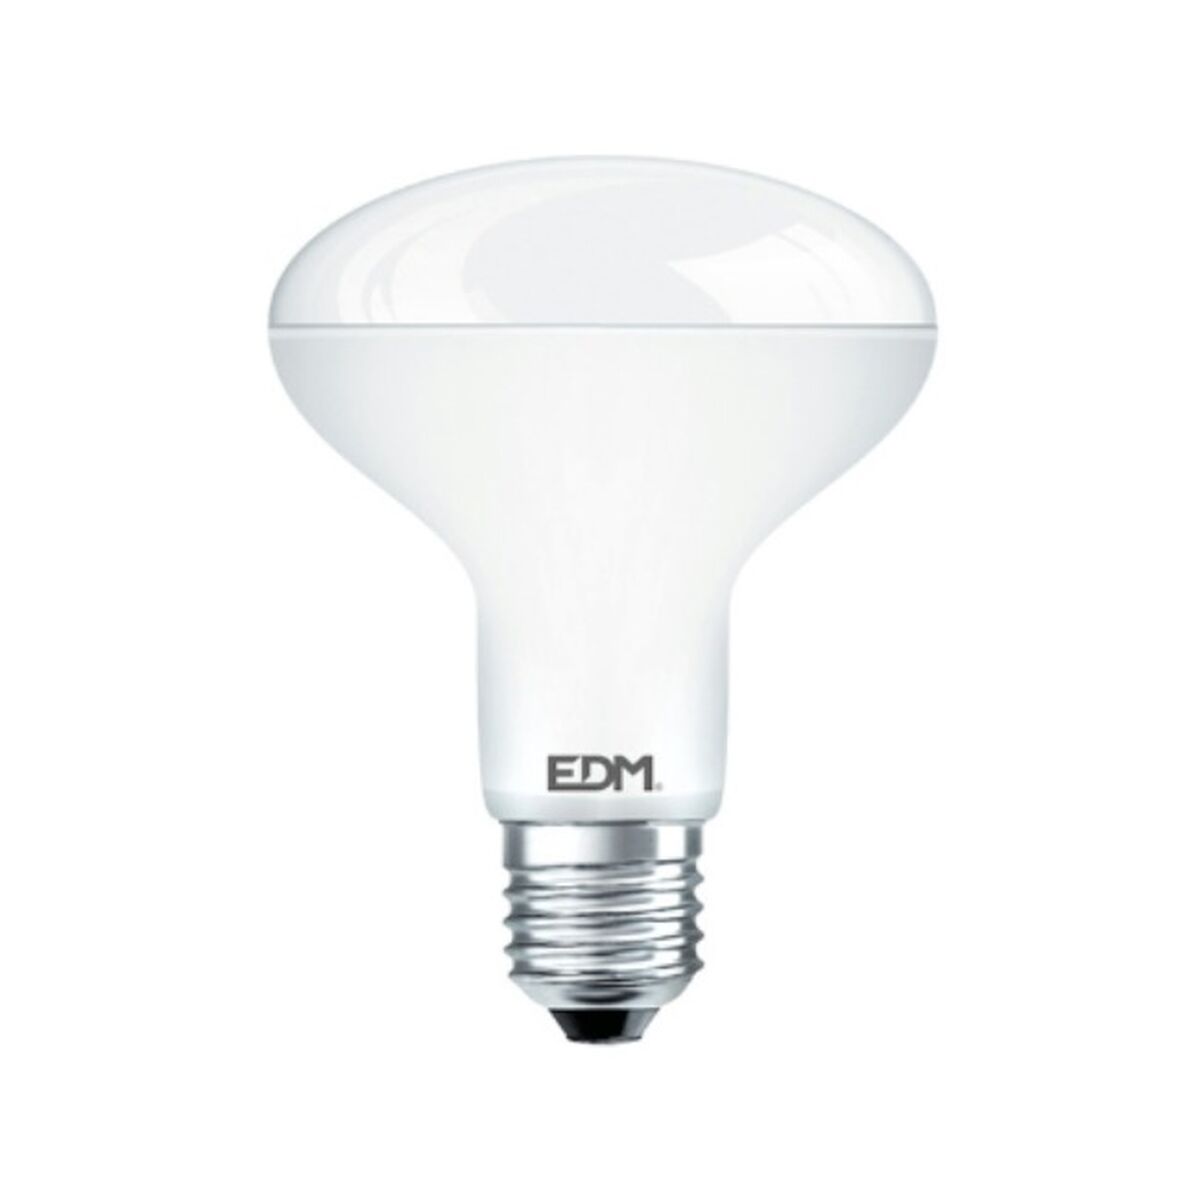 Ledlamp EDM Reflector F 10 W E27 810 Lm Ø 7,9 x 11 cm (3200 K)